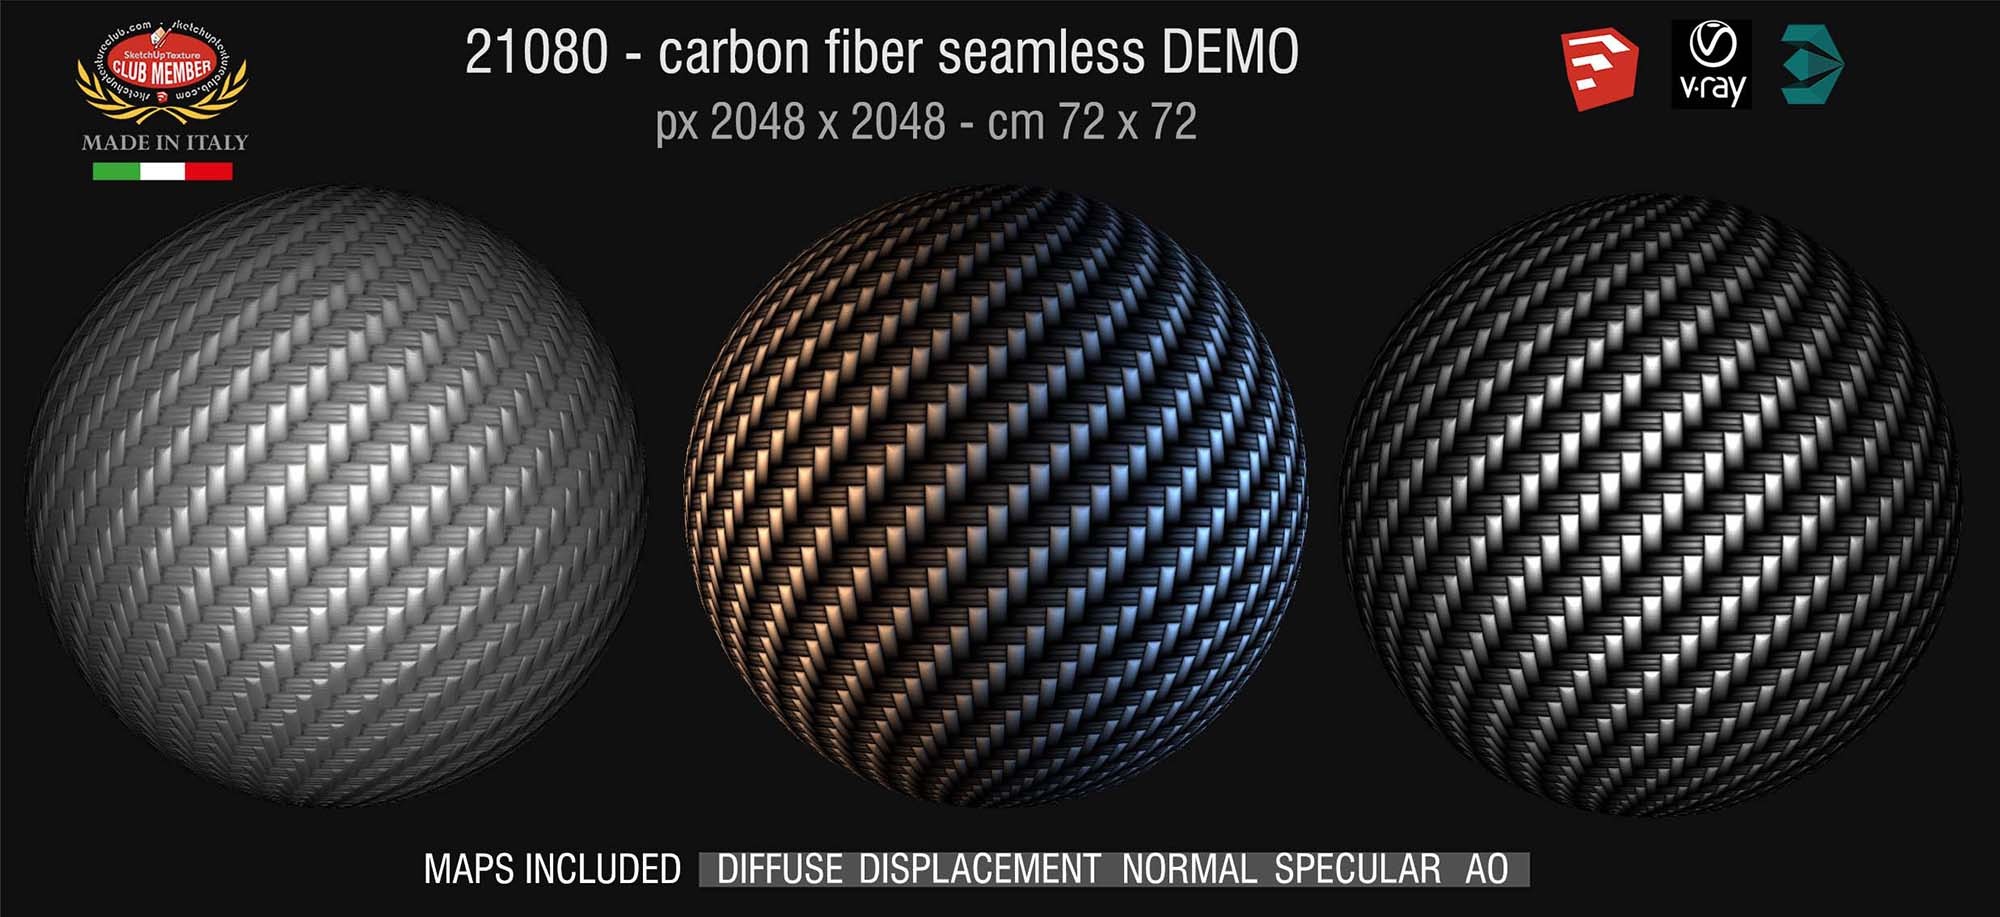 21080 carbon fiber fabrics PBR  textures seamless  DEMO